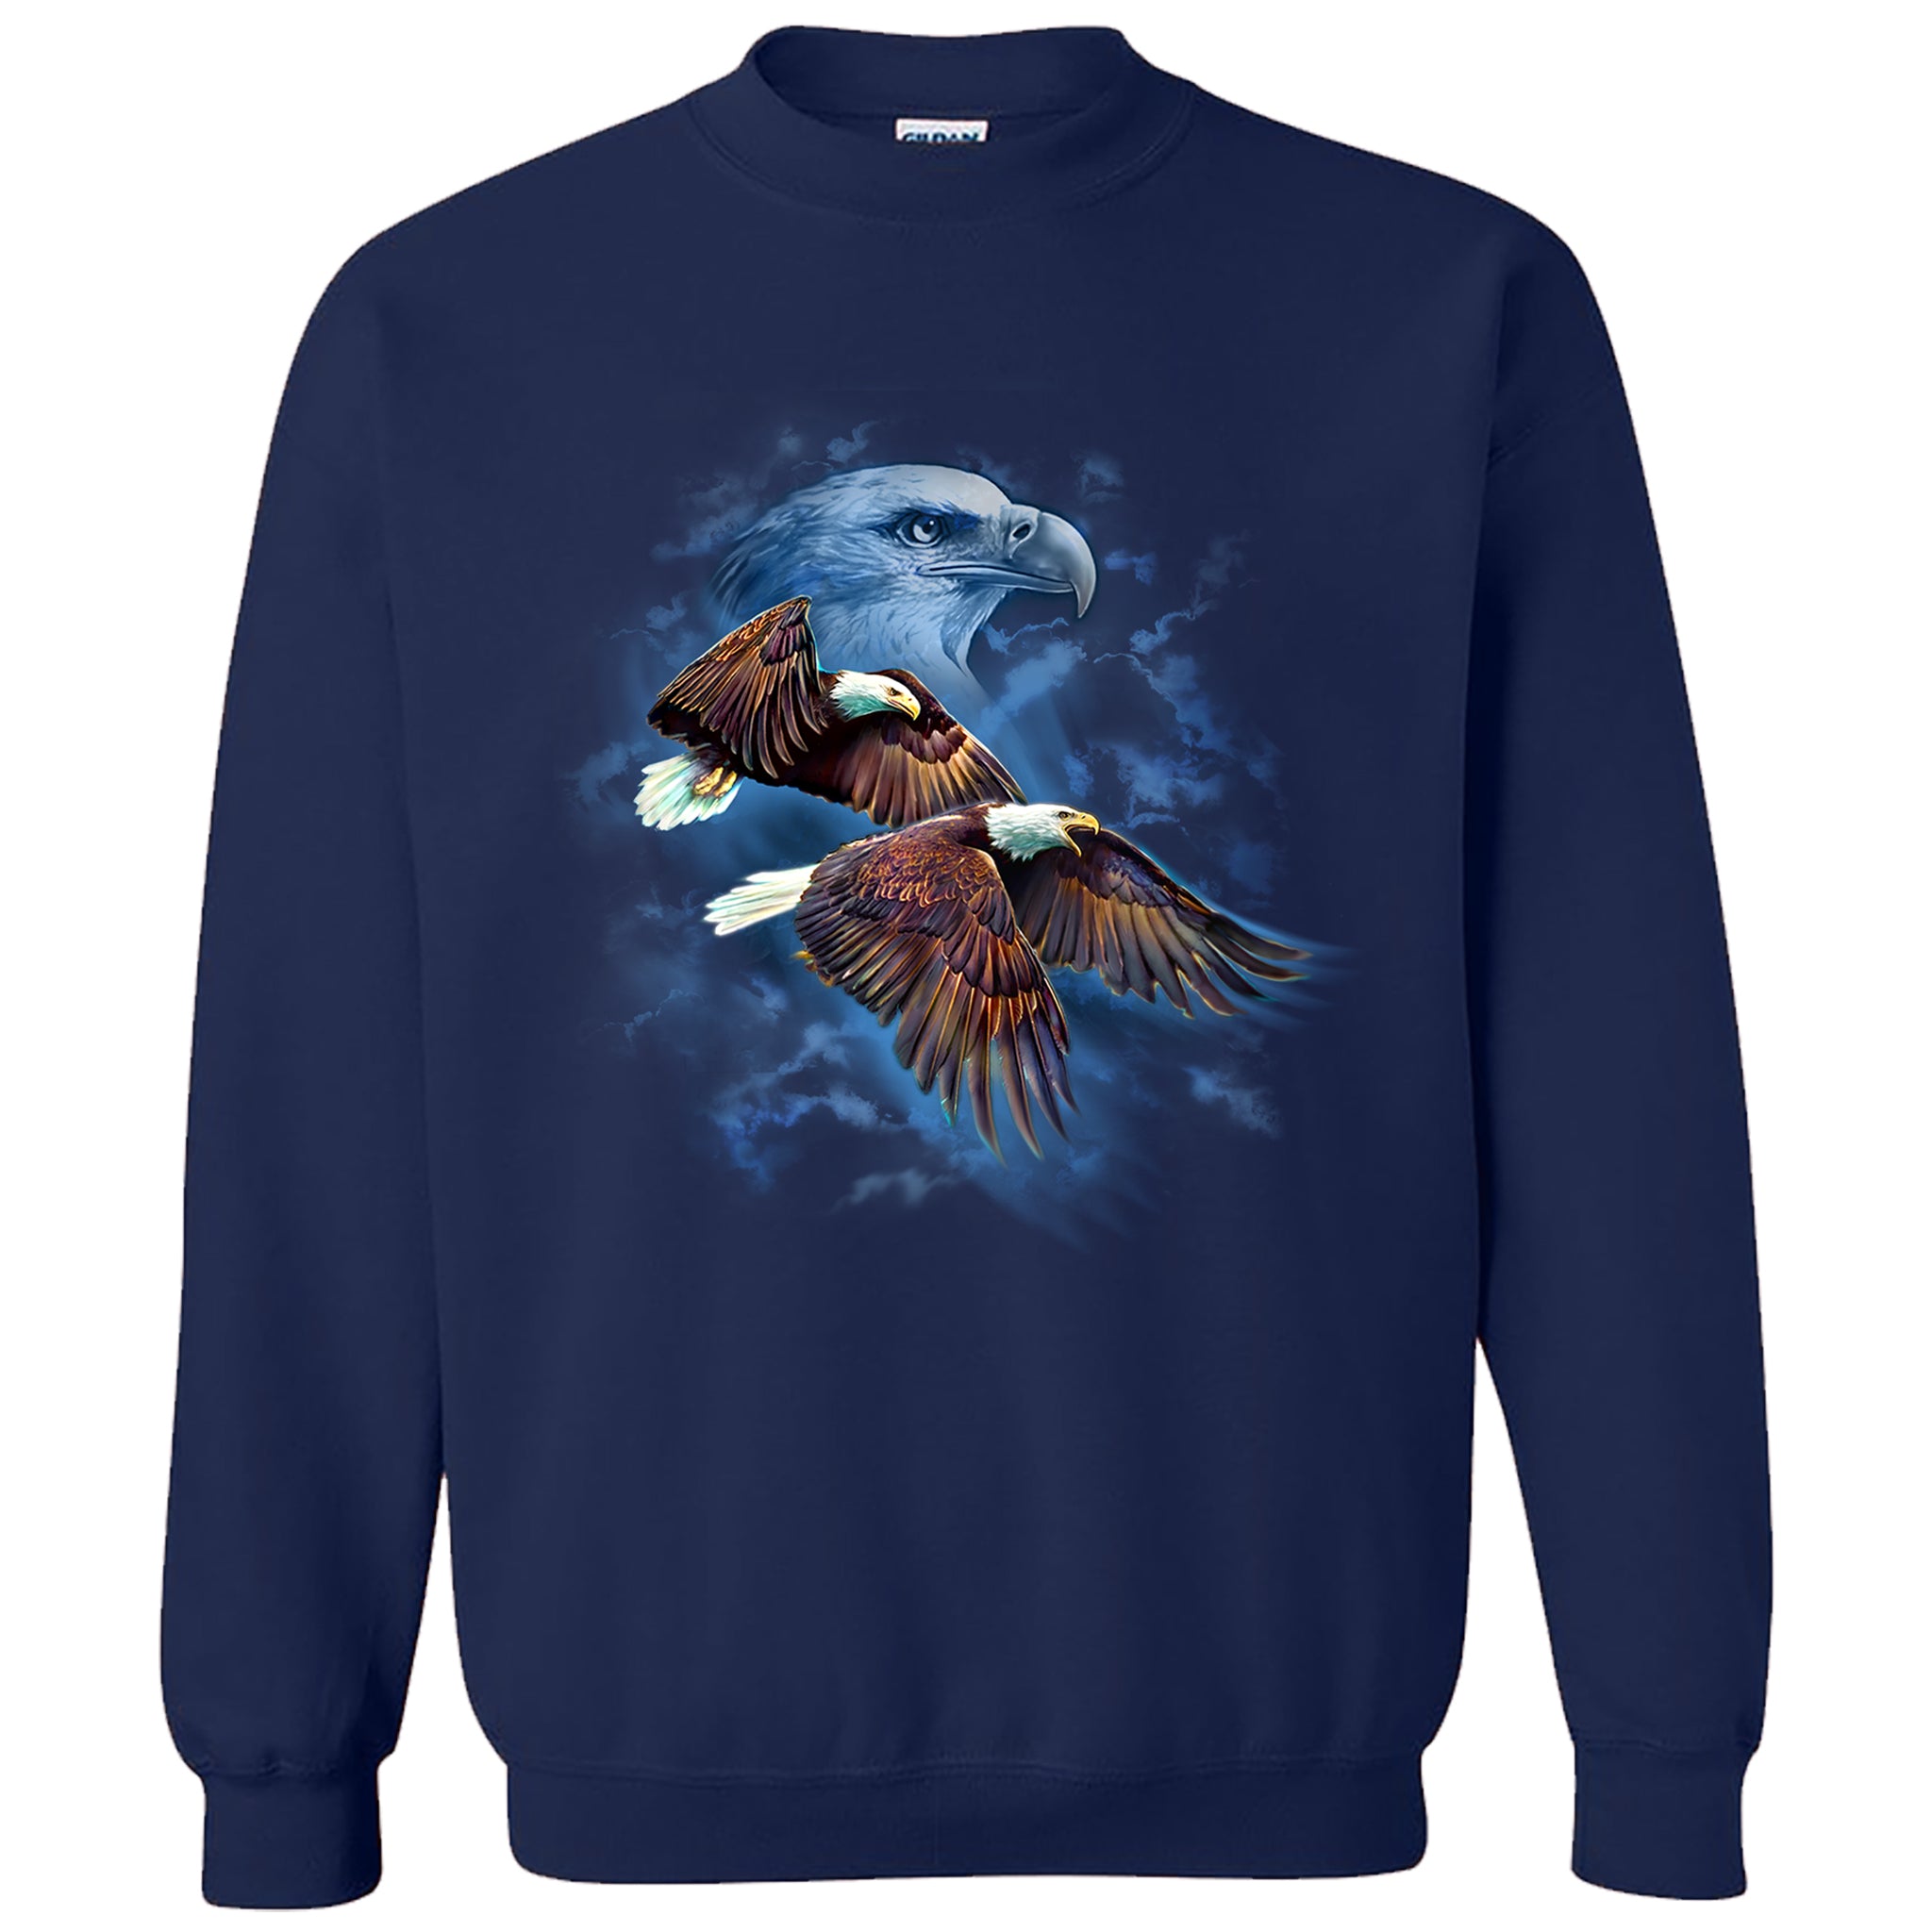 Night Flyers Crew Neck Sweatshirt - navy crew neck sweatshirt with eagle art by artist Tami Alba